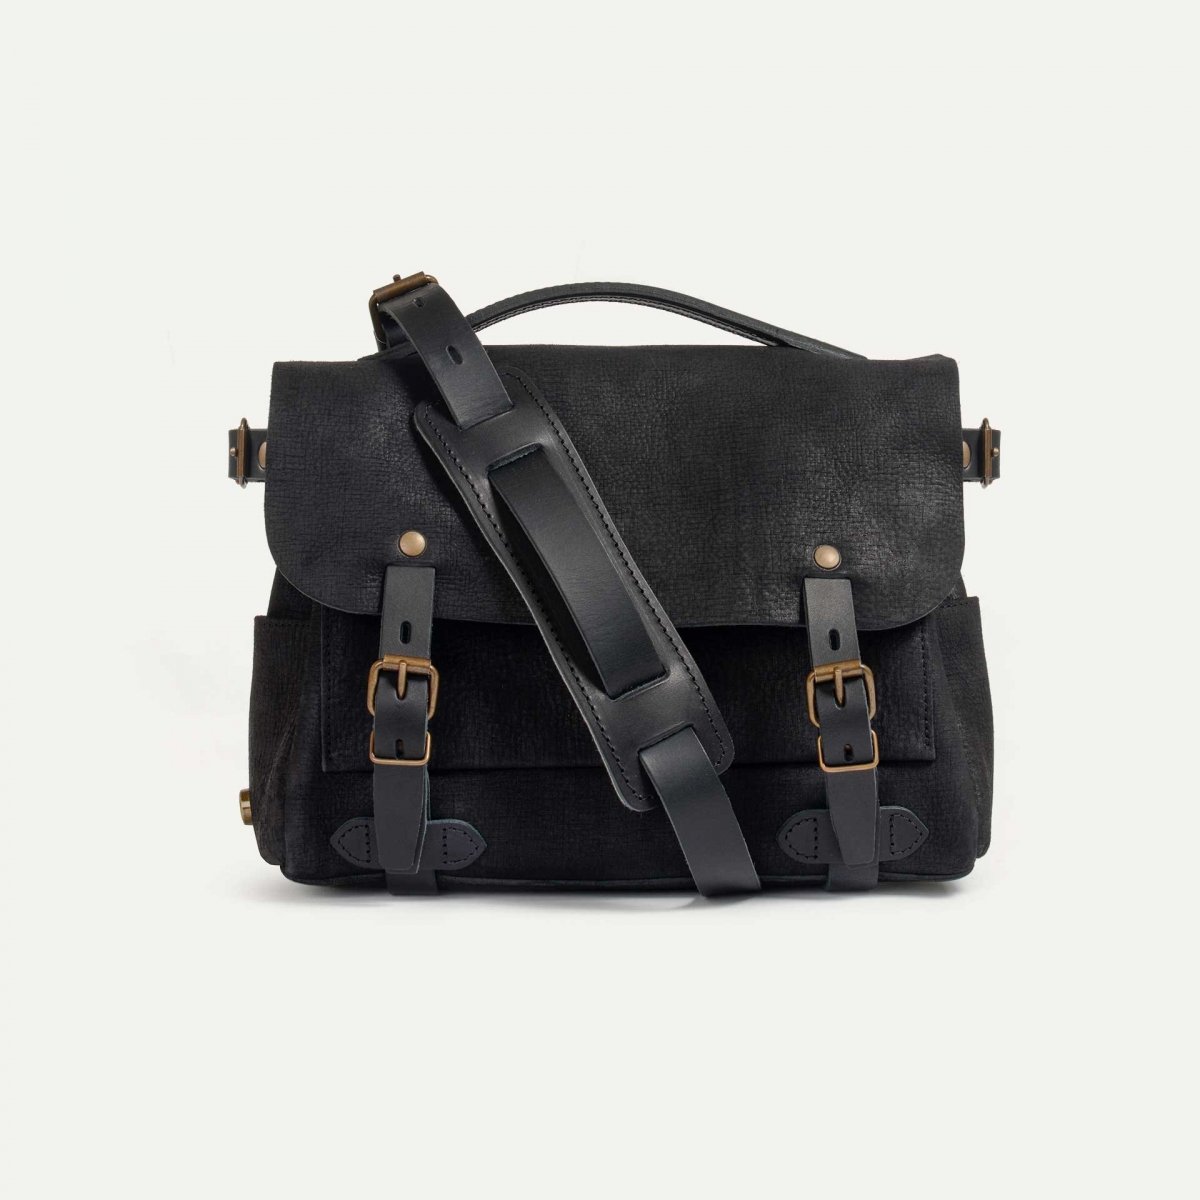 Postman bag Éclair S - Charcoal black / Waxed Leather (image n°1)